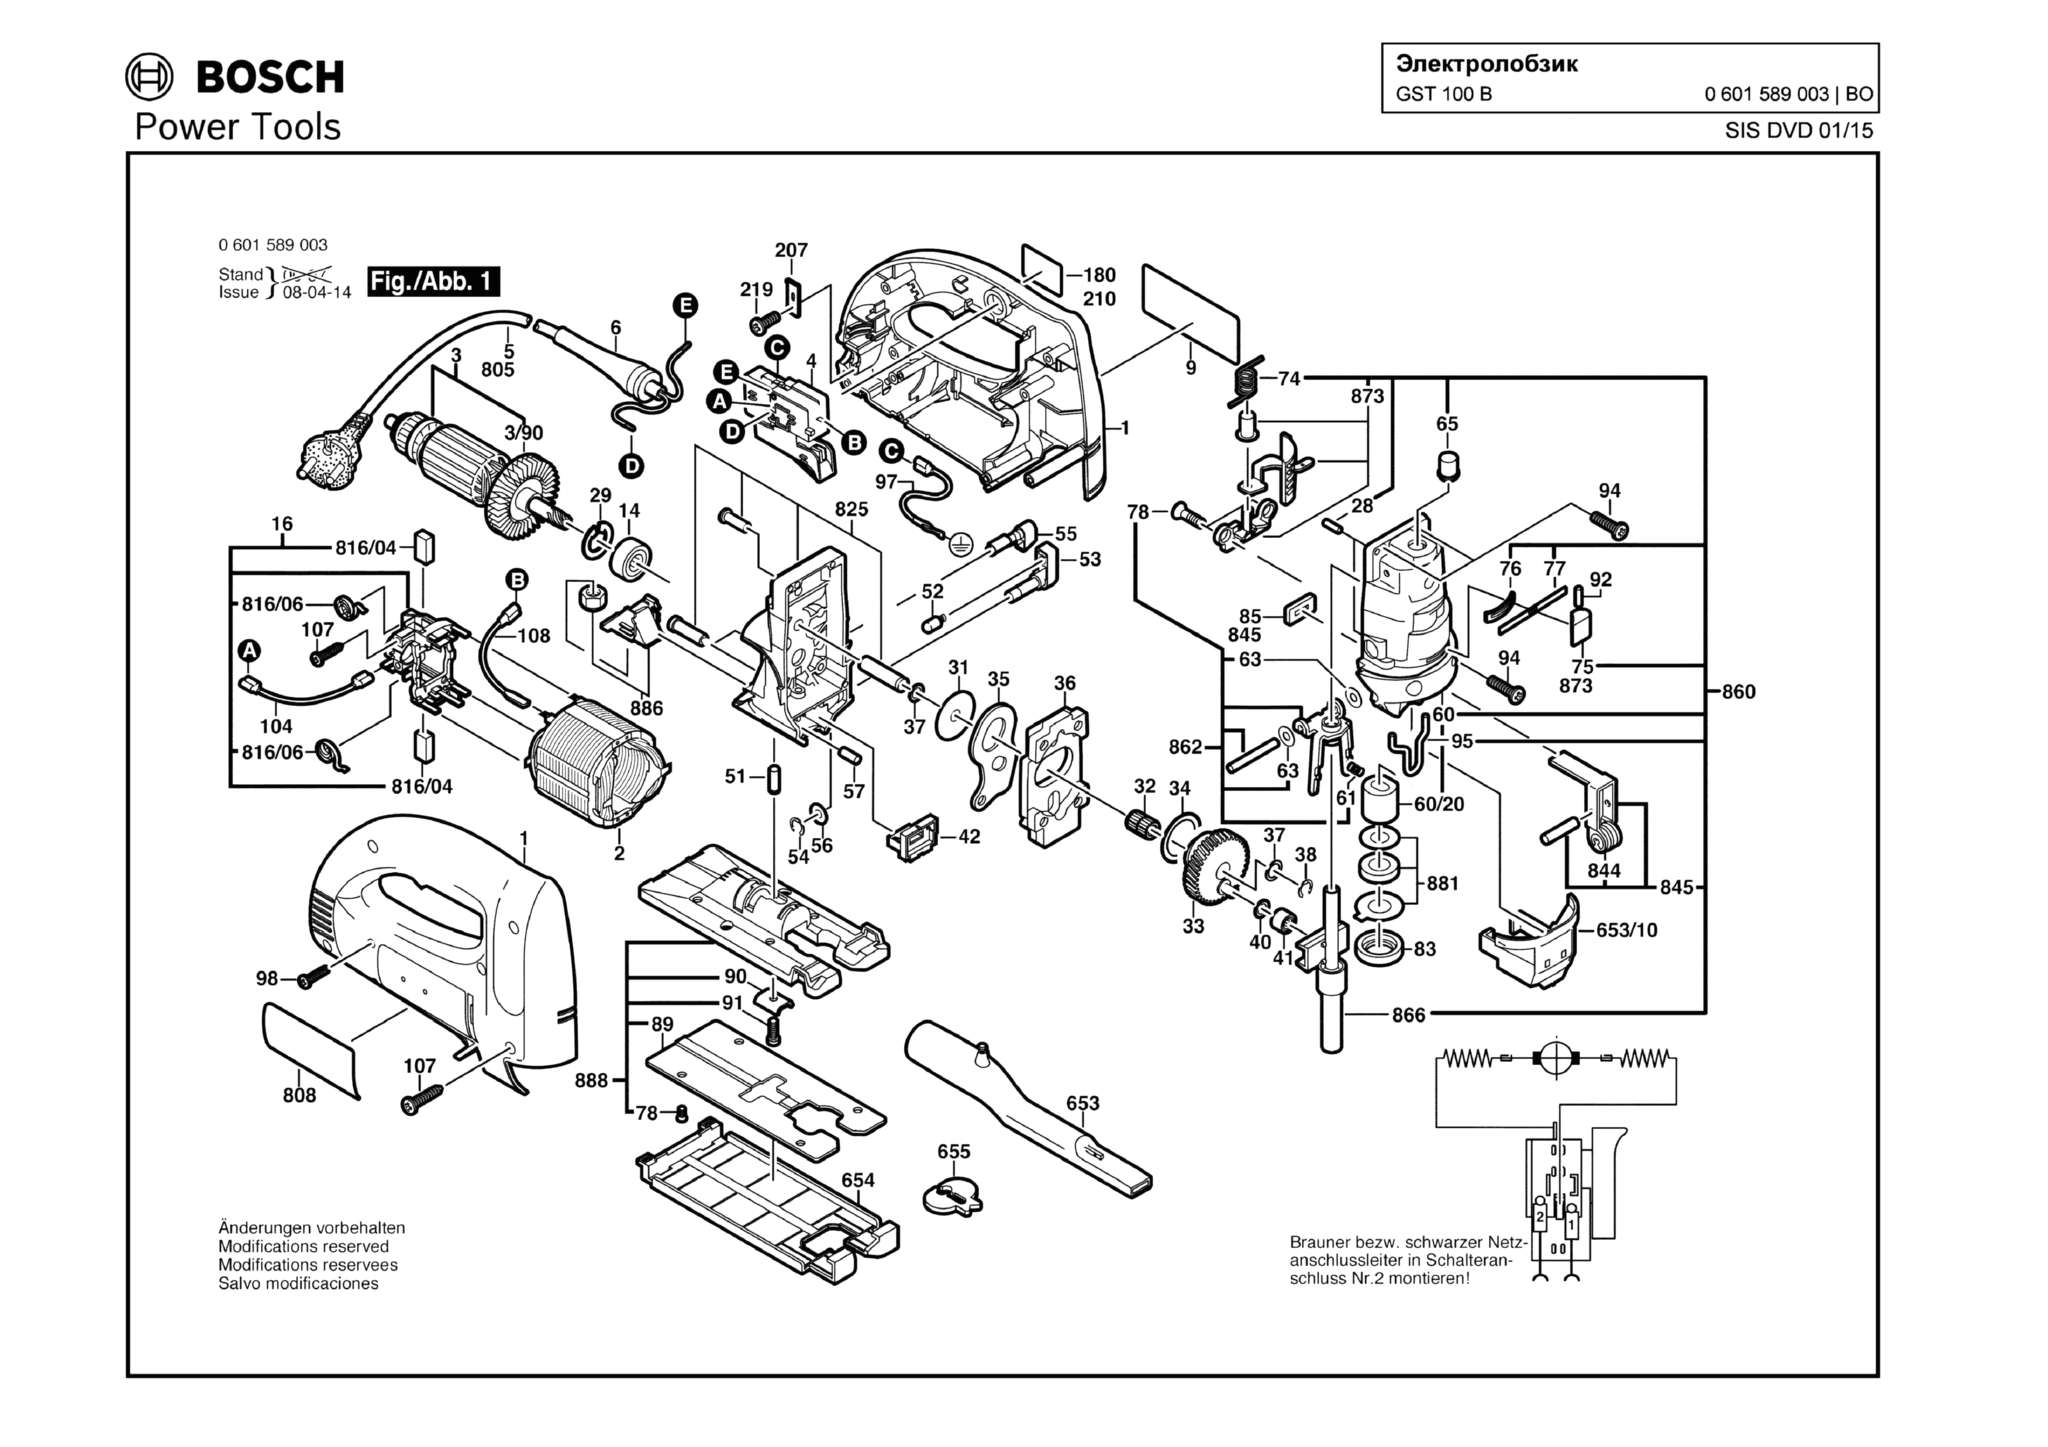 Запчасти, схема и деталировка Bosch GST 100 B (ТИП 0601589003)